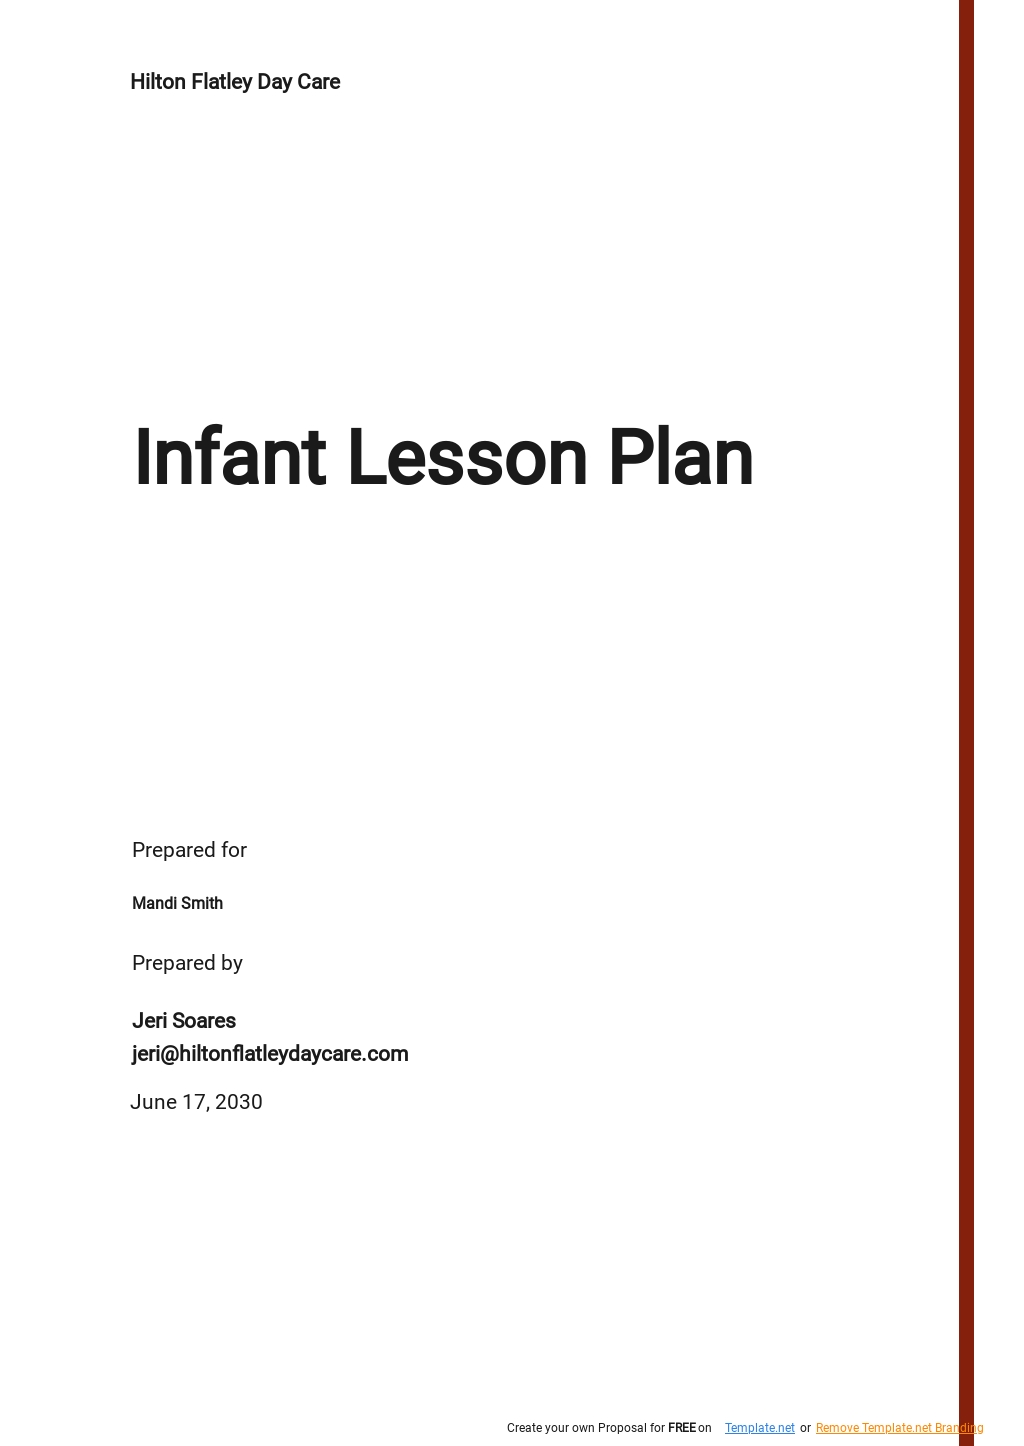 Sample Infant Lesson Plan Template.jpe